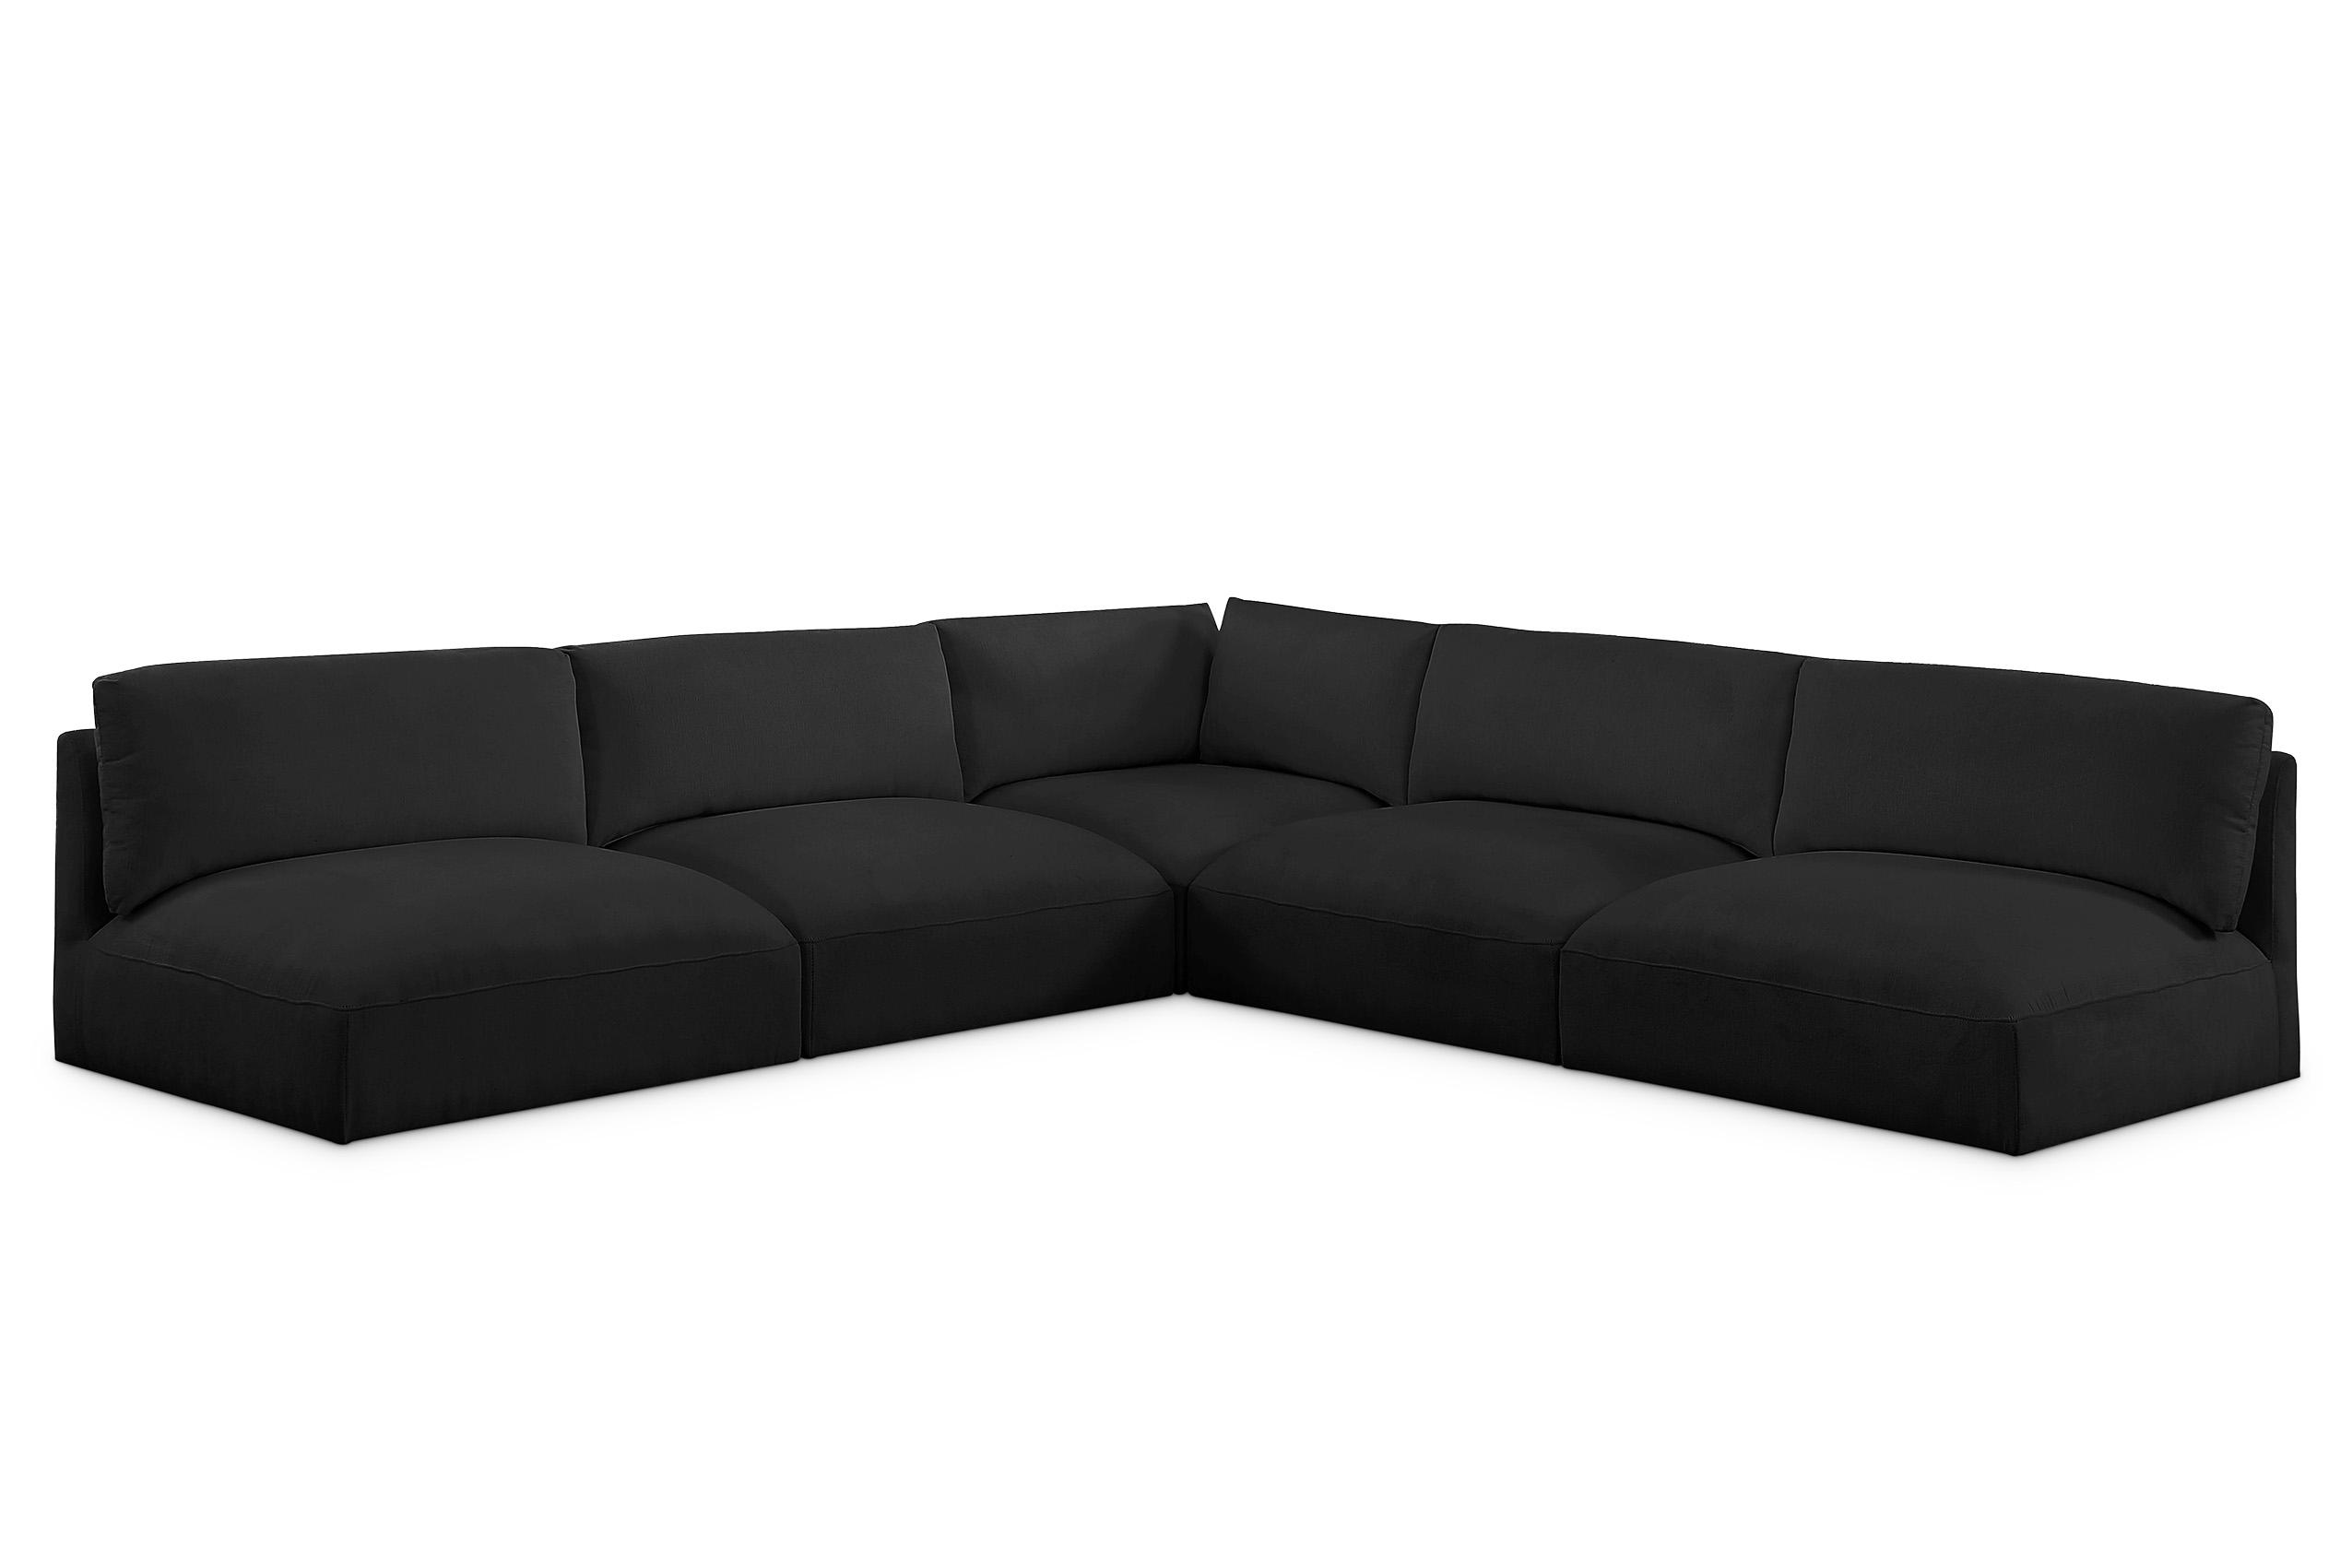 Contemporary, Modern Modular Sectional Sofa EASE 696Black-Sec5C 696Black-Sec5C in Black Fabric